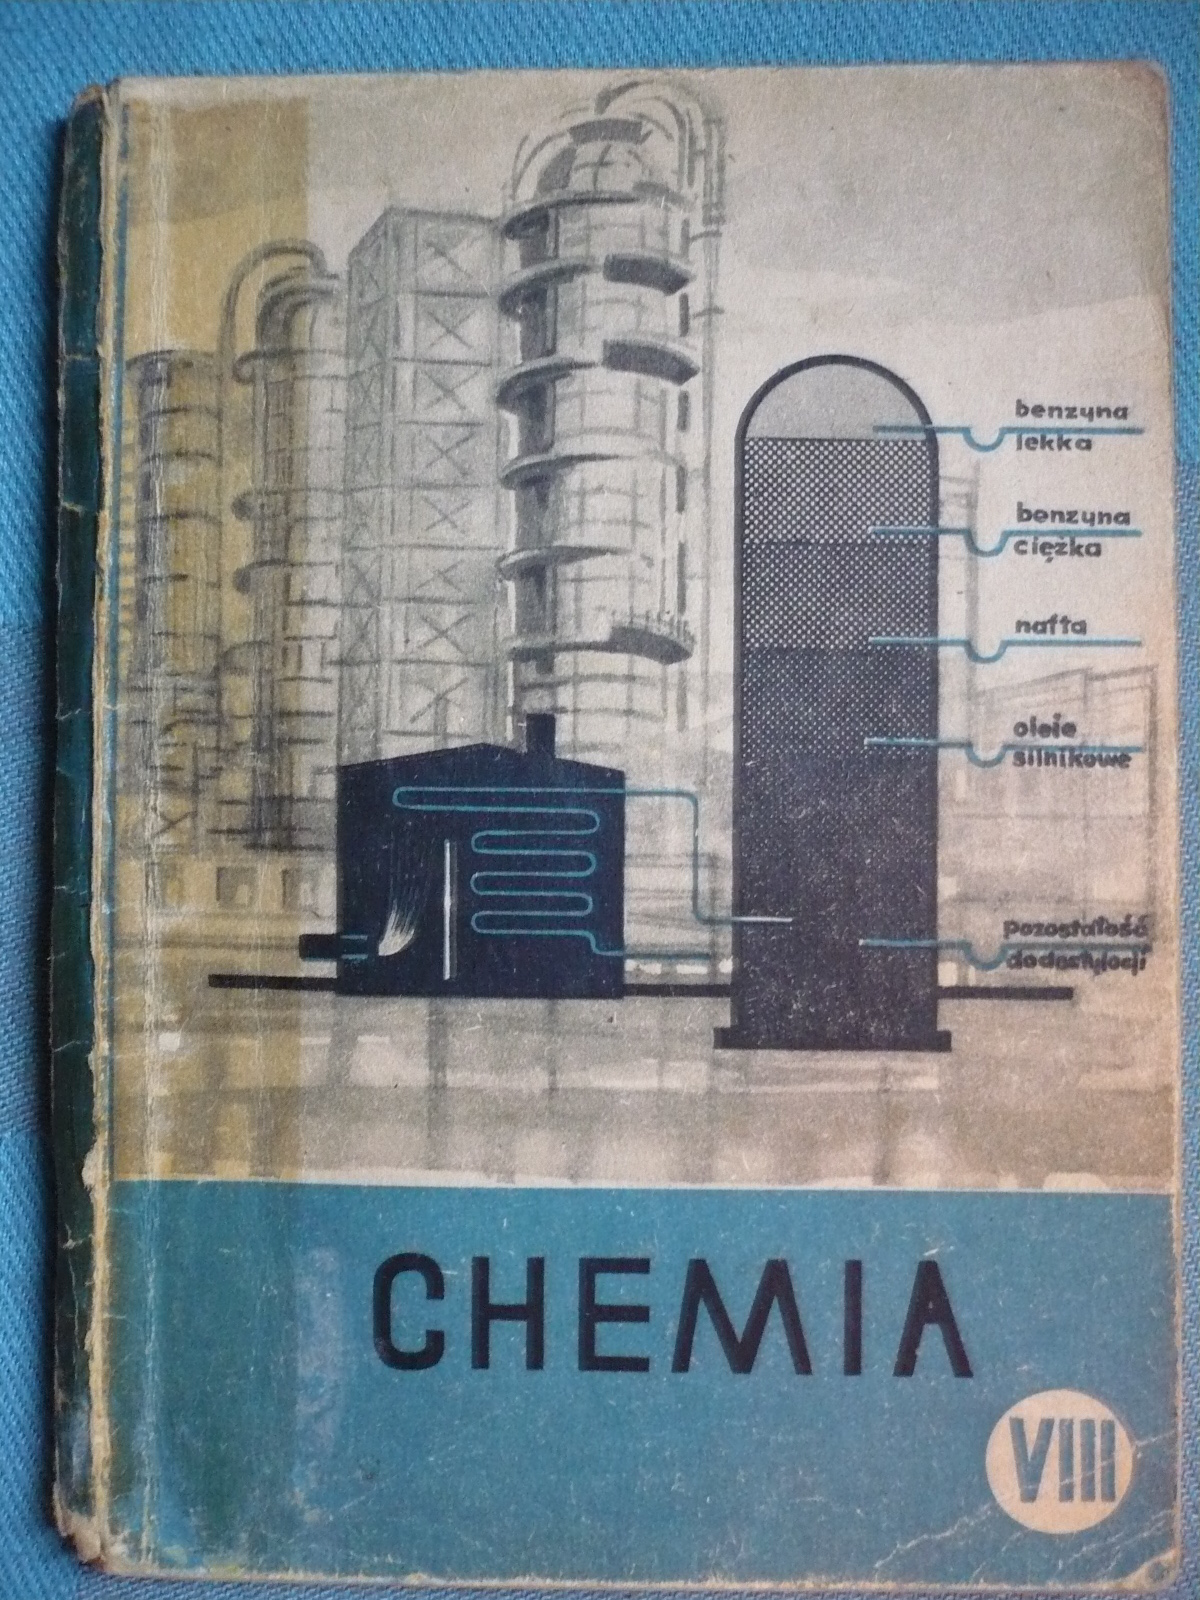 Chemia Kl. VIII (1968).JPG